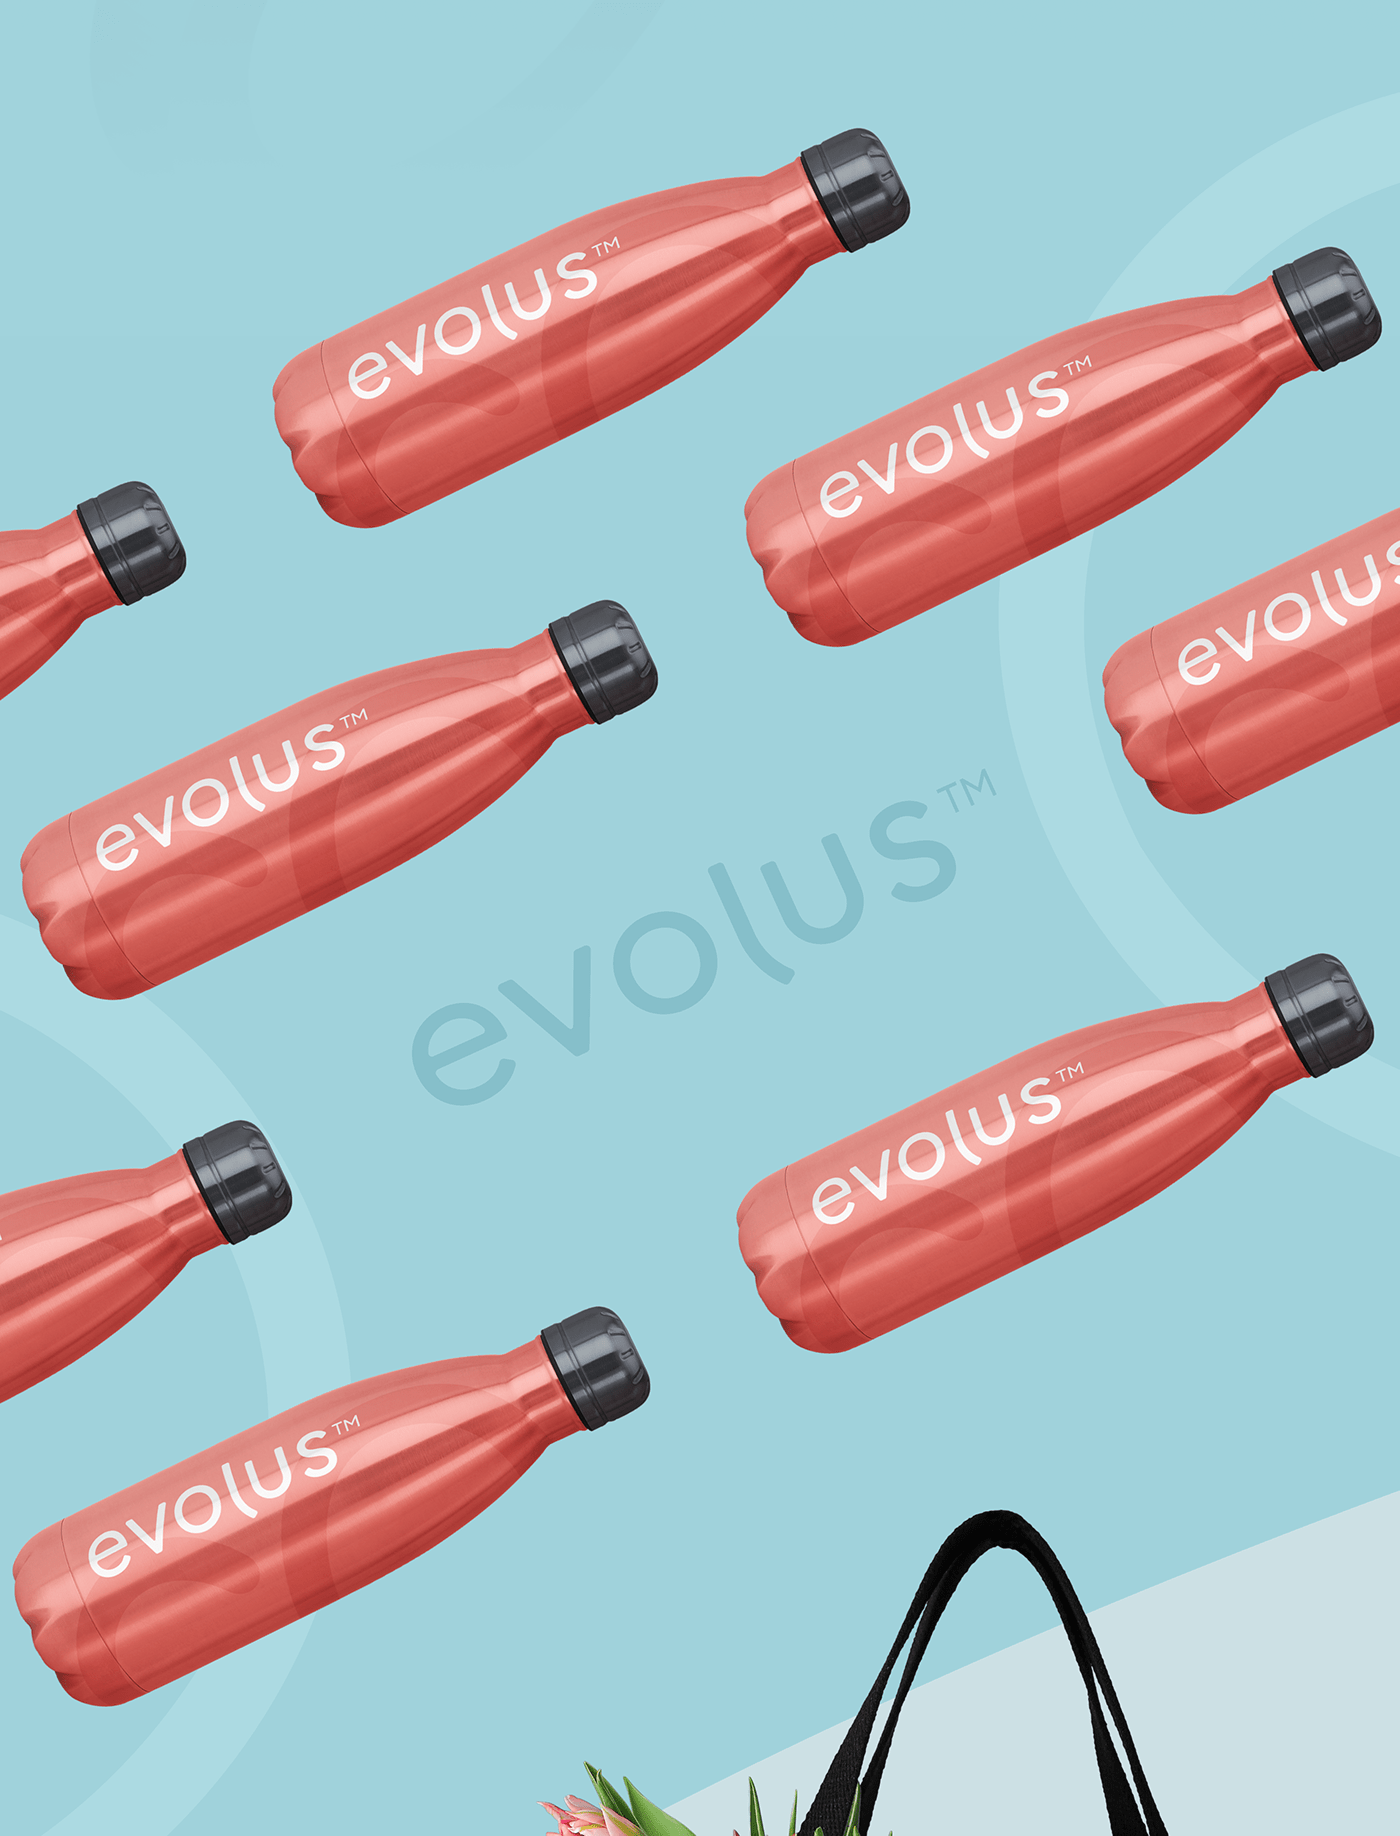 Branded sport bottles displaying Evolus’s logo, primary color, and motif based on the symbol.